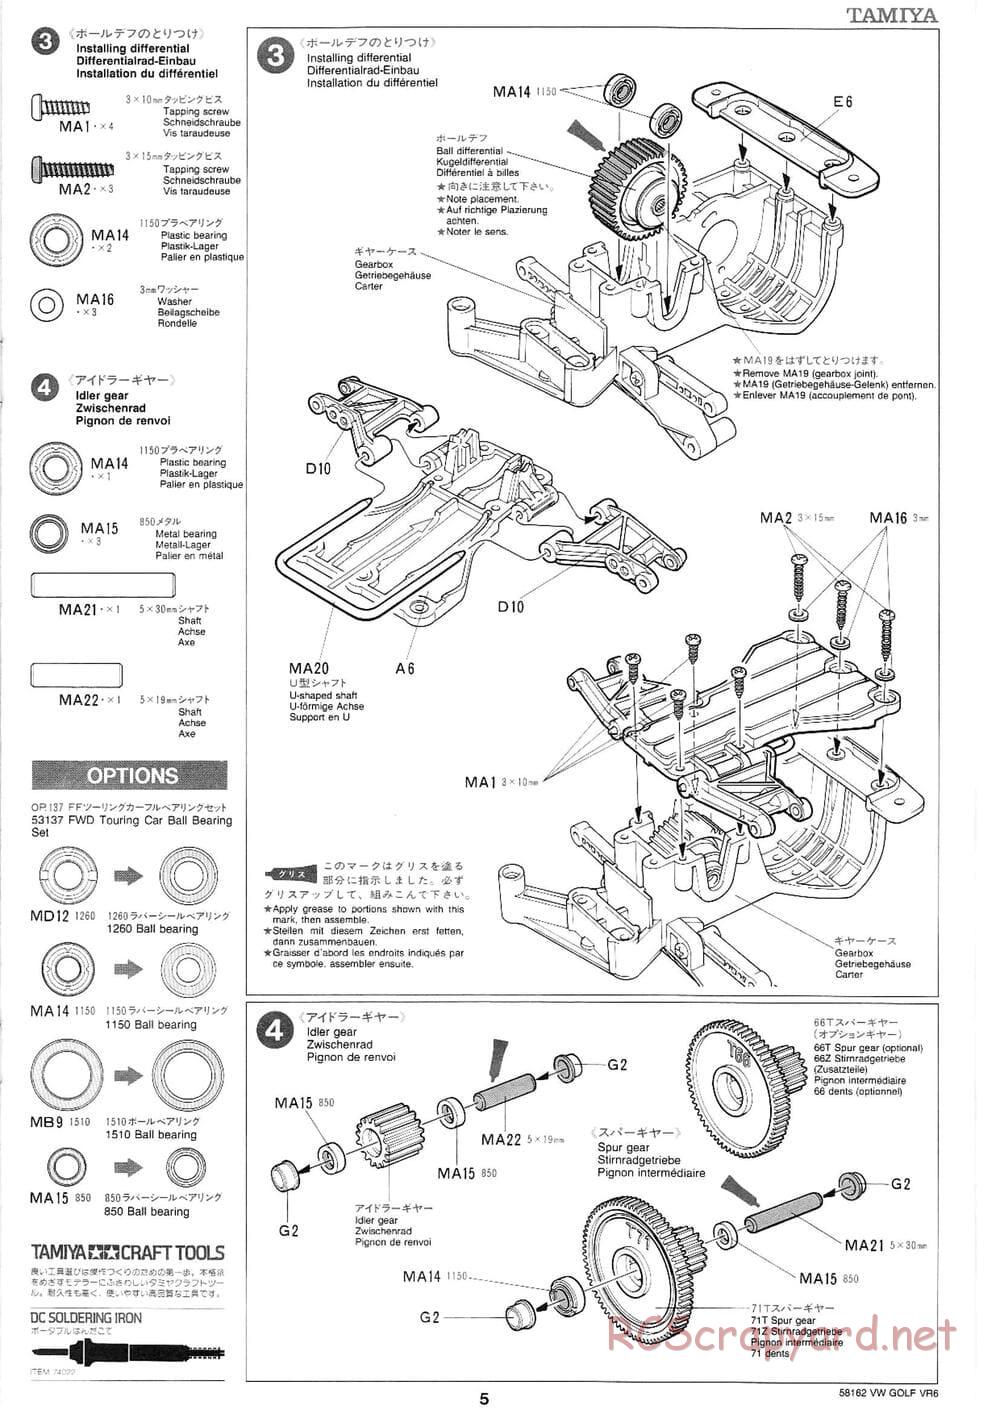 Tamiya - Volkswagen Golf VR6 - FF-01 Chassis - Manual - Page 5